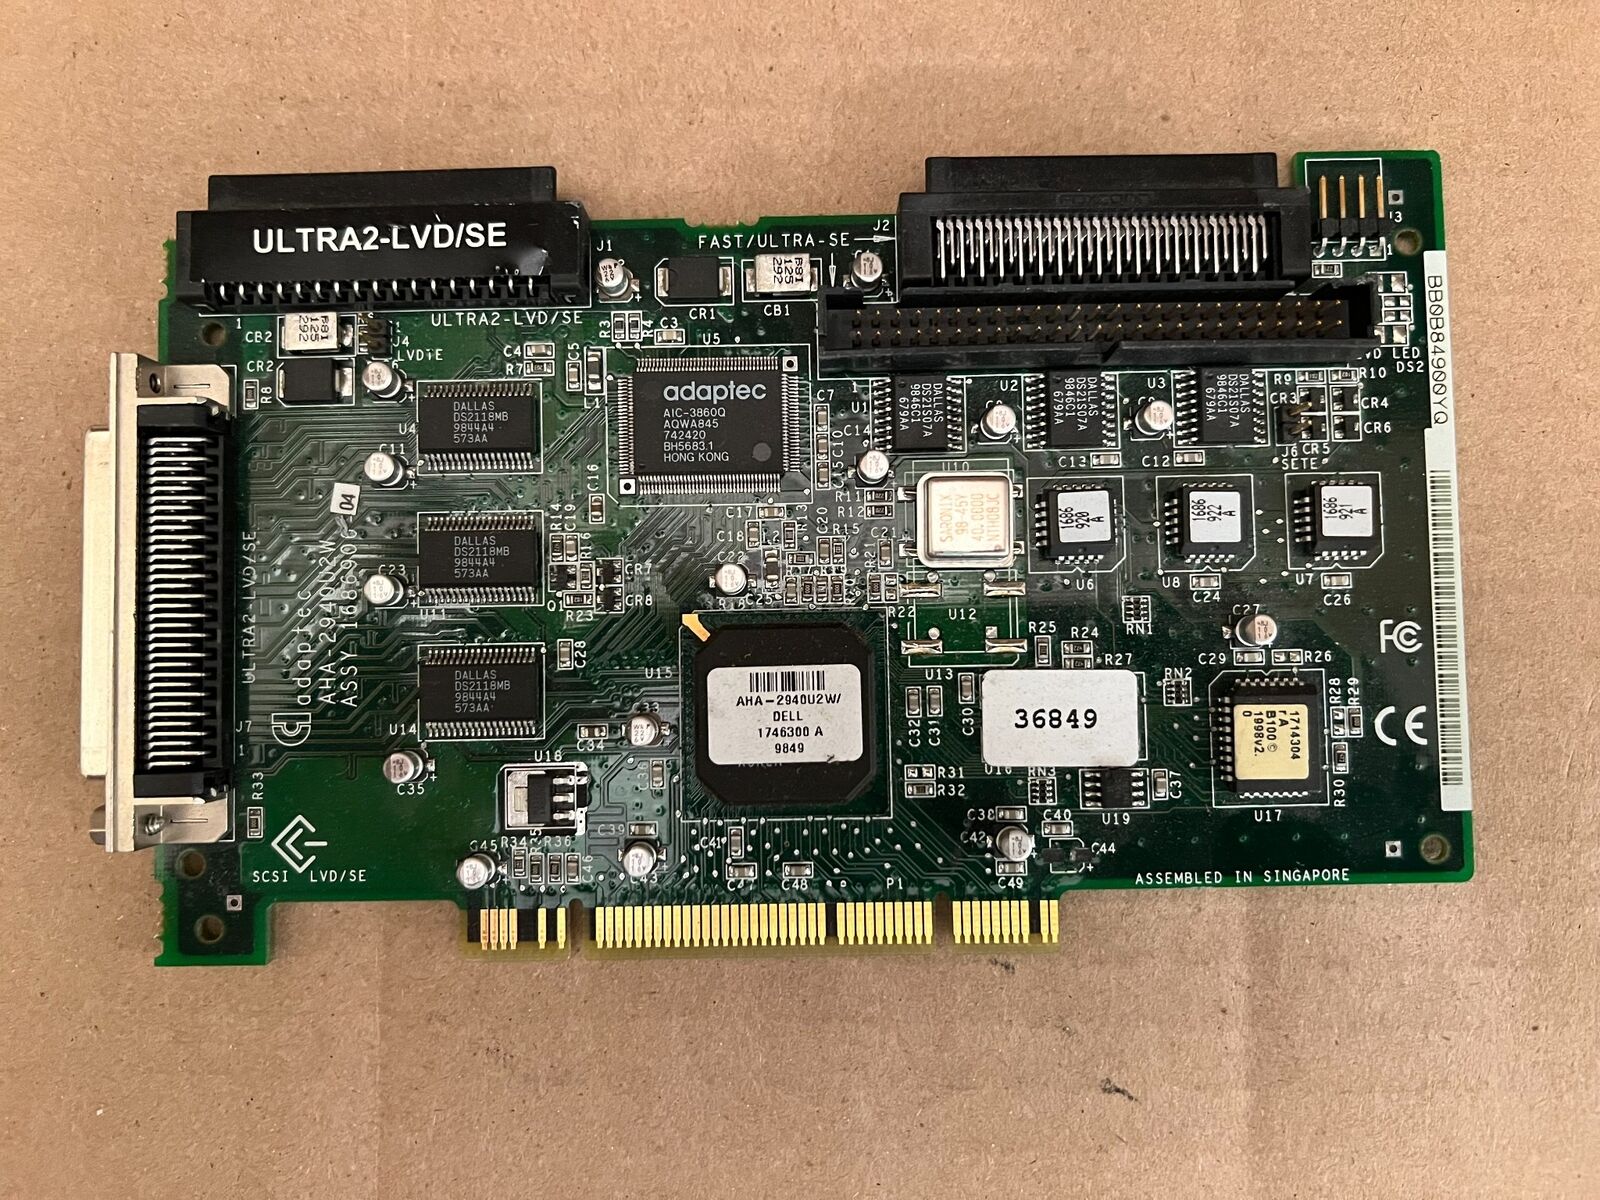 ADAPTEC AHA-2940U2W FAST ULTRA2-LVD/SE SCSI PCI CONTROLLER ADAPTER M1-4(8)